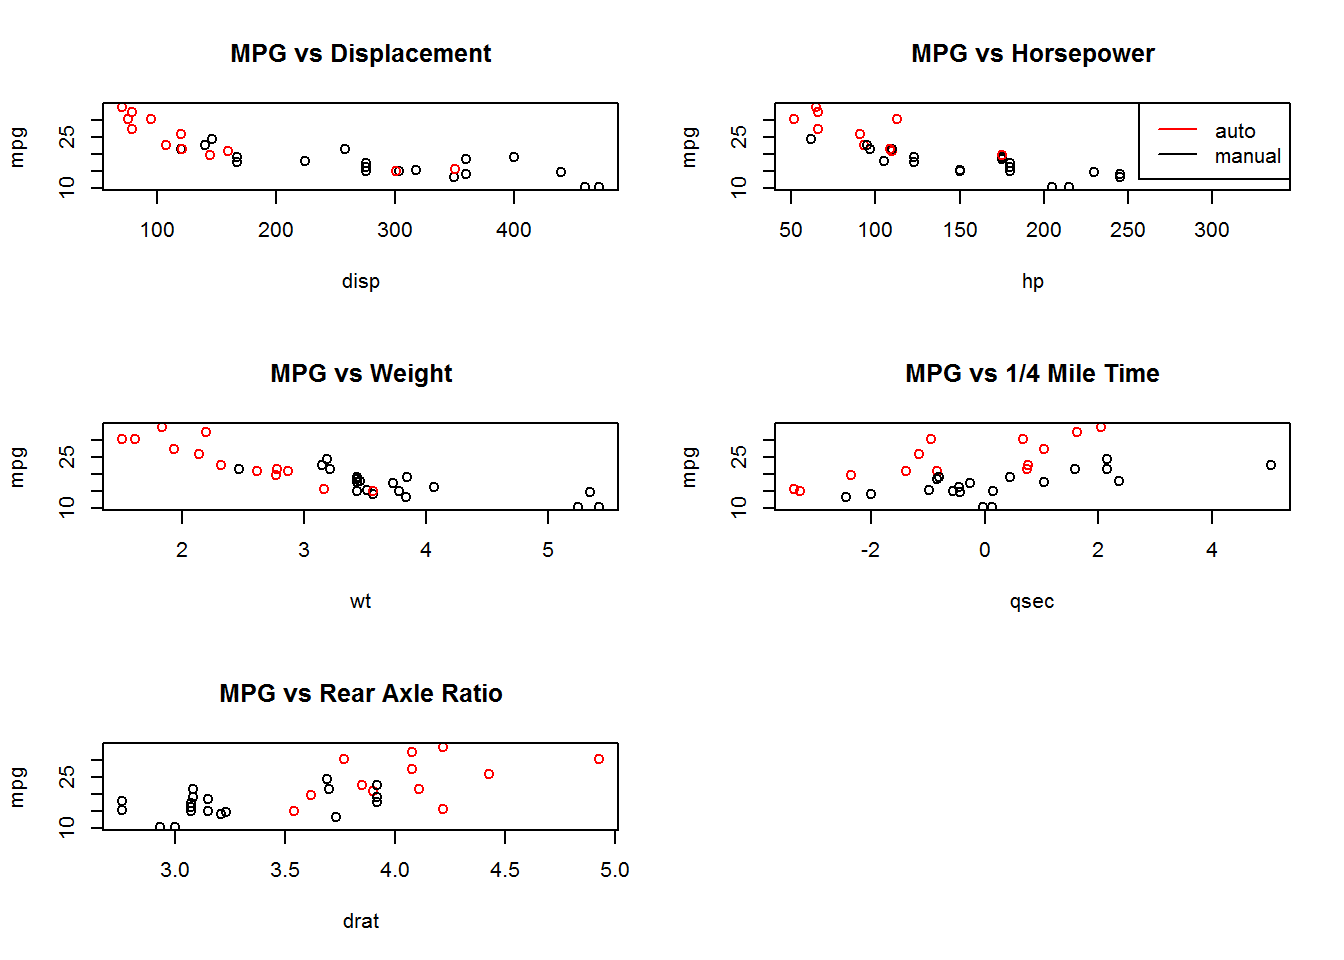 MPG vs Non-Categorical Variables